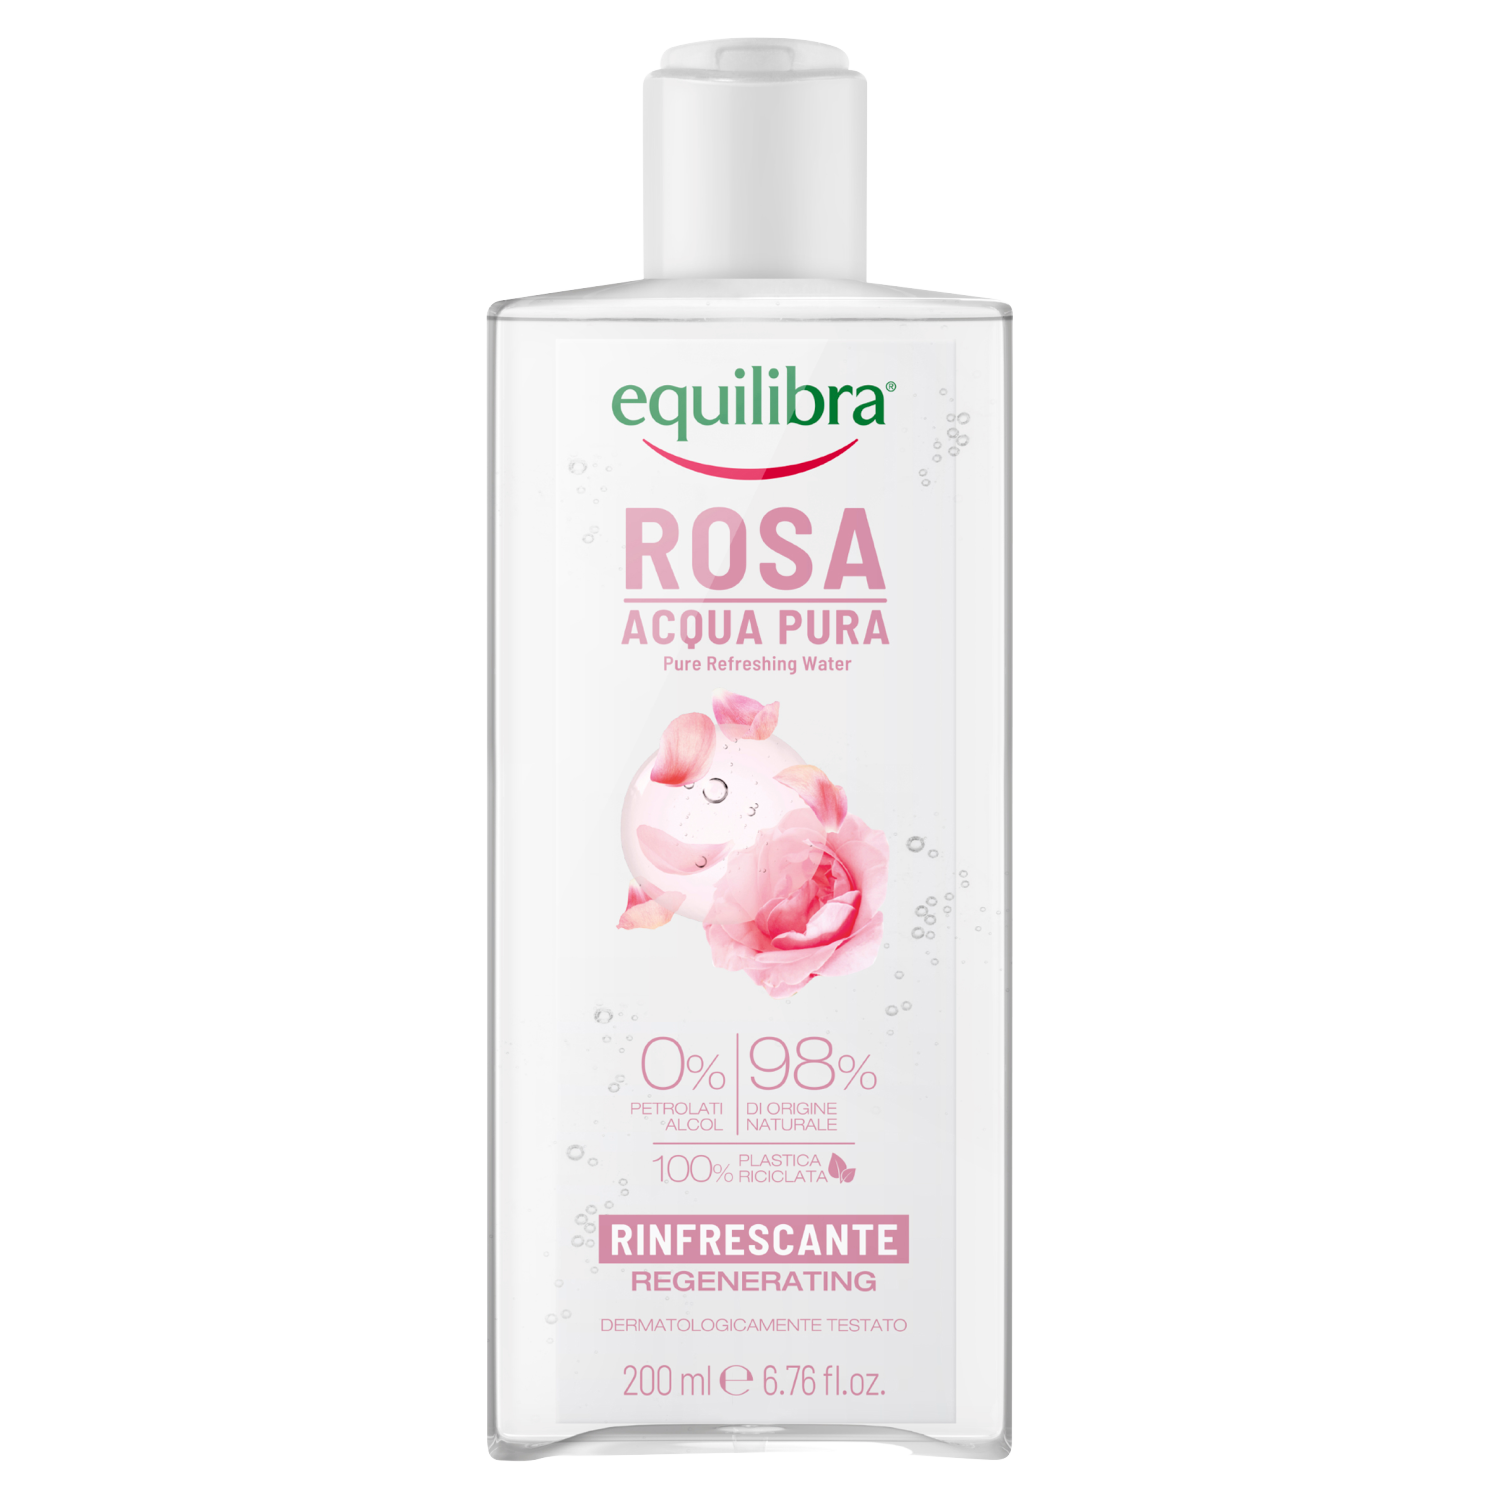 Equilibra Rosa освежающая розовая вода для лица, 200 мл освежающая чистая розовая вода rosa pure 200 мл equilibra